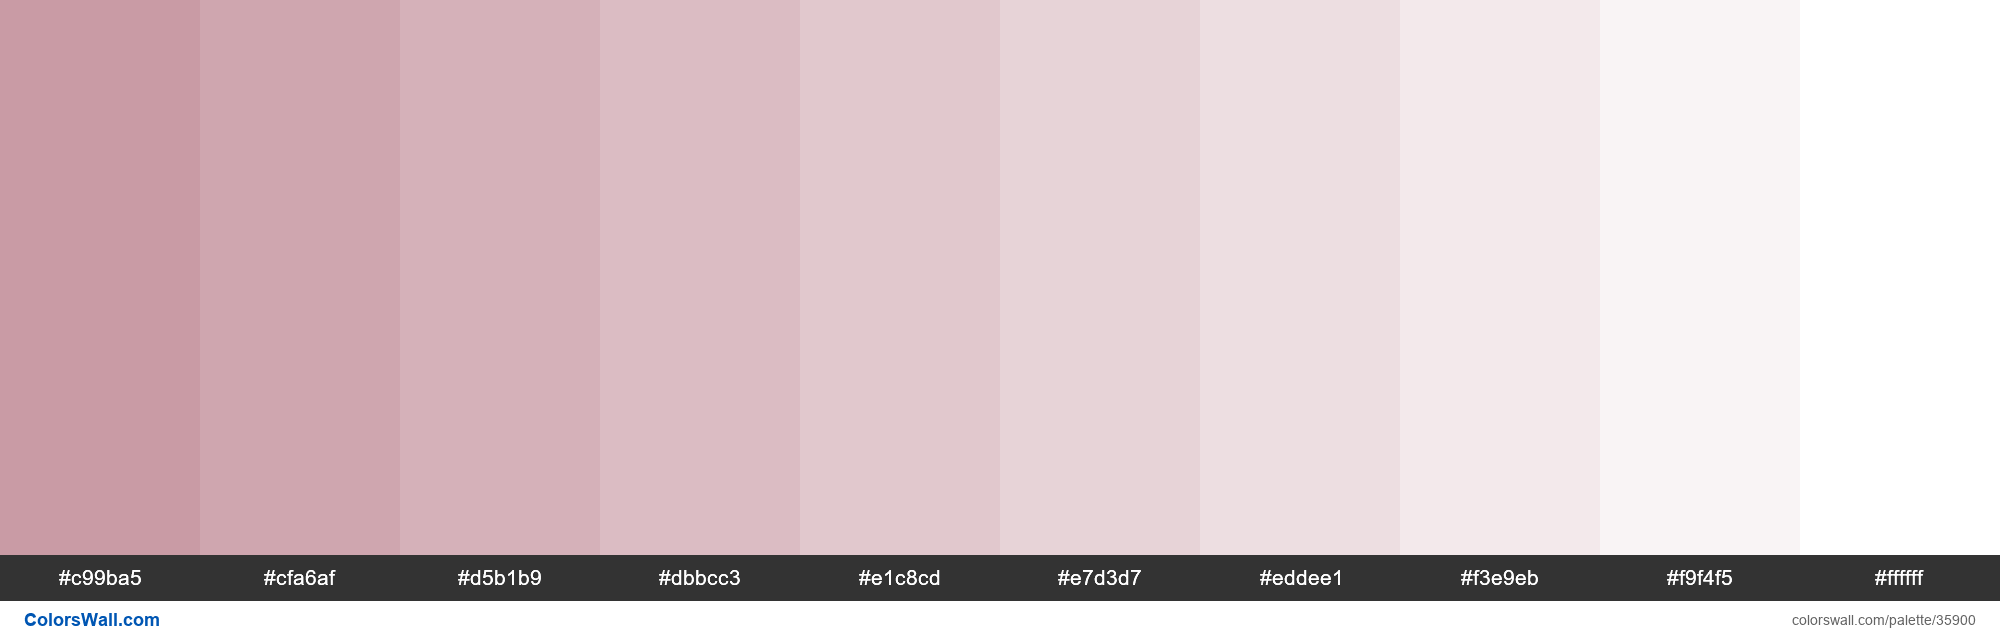 Tints XKCD Color grey pink #c3909b hex colors palette - ColorsWall